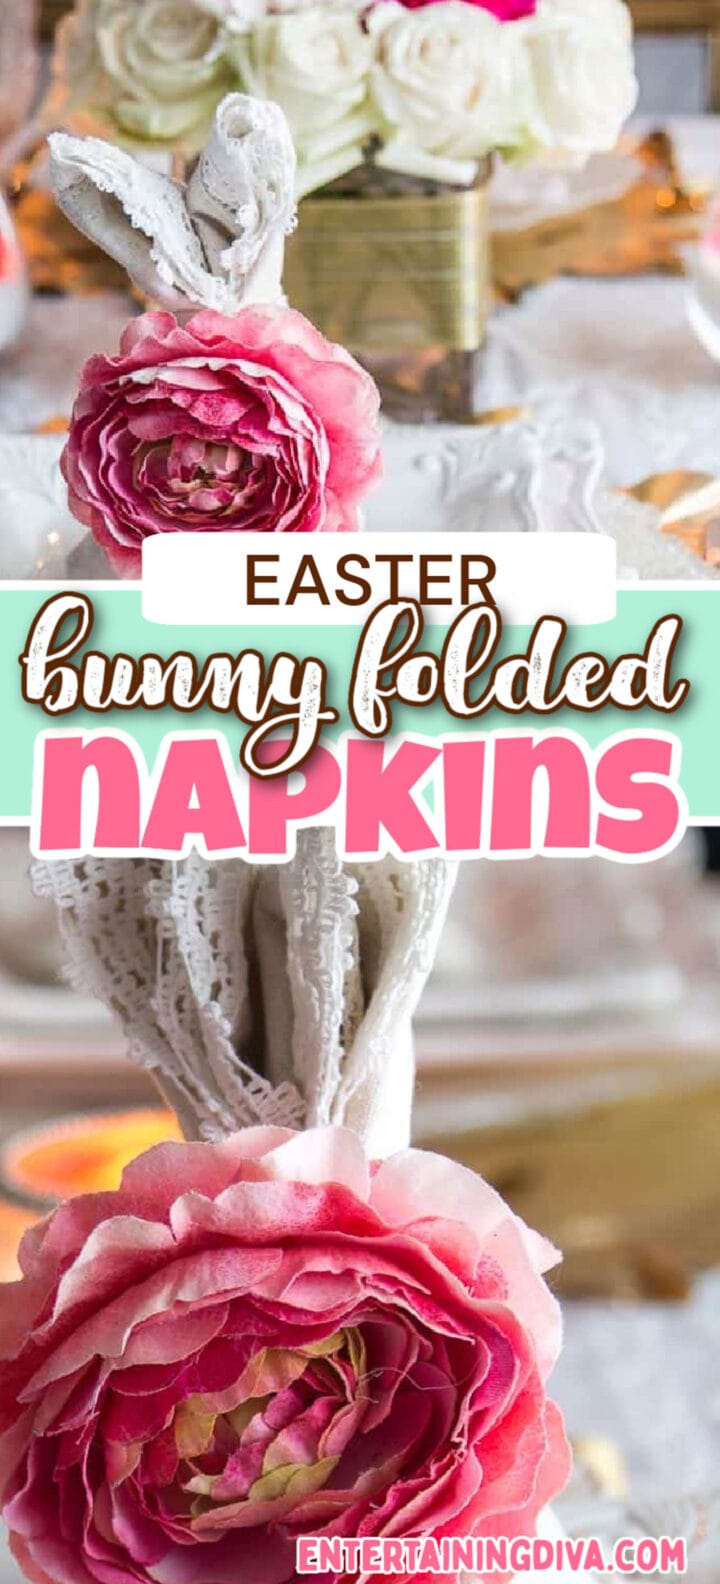 Easy Easter Decor: How To Make Bunny Folded Napkins